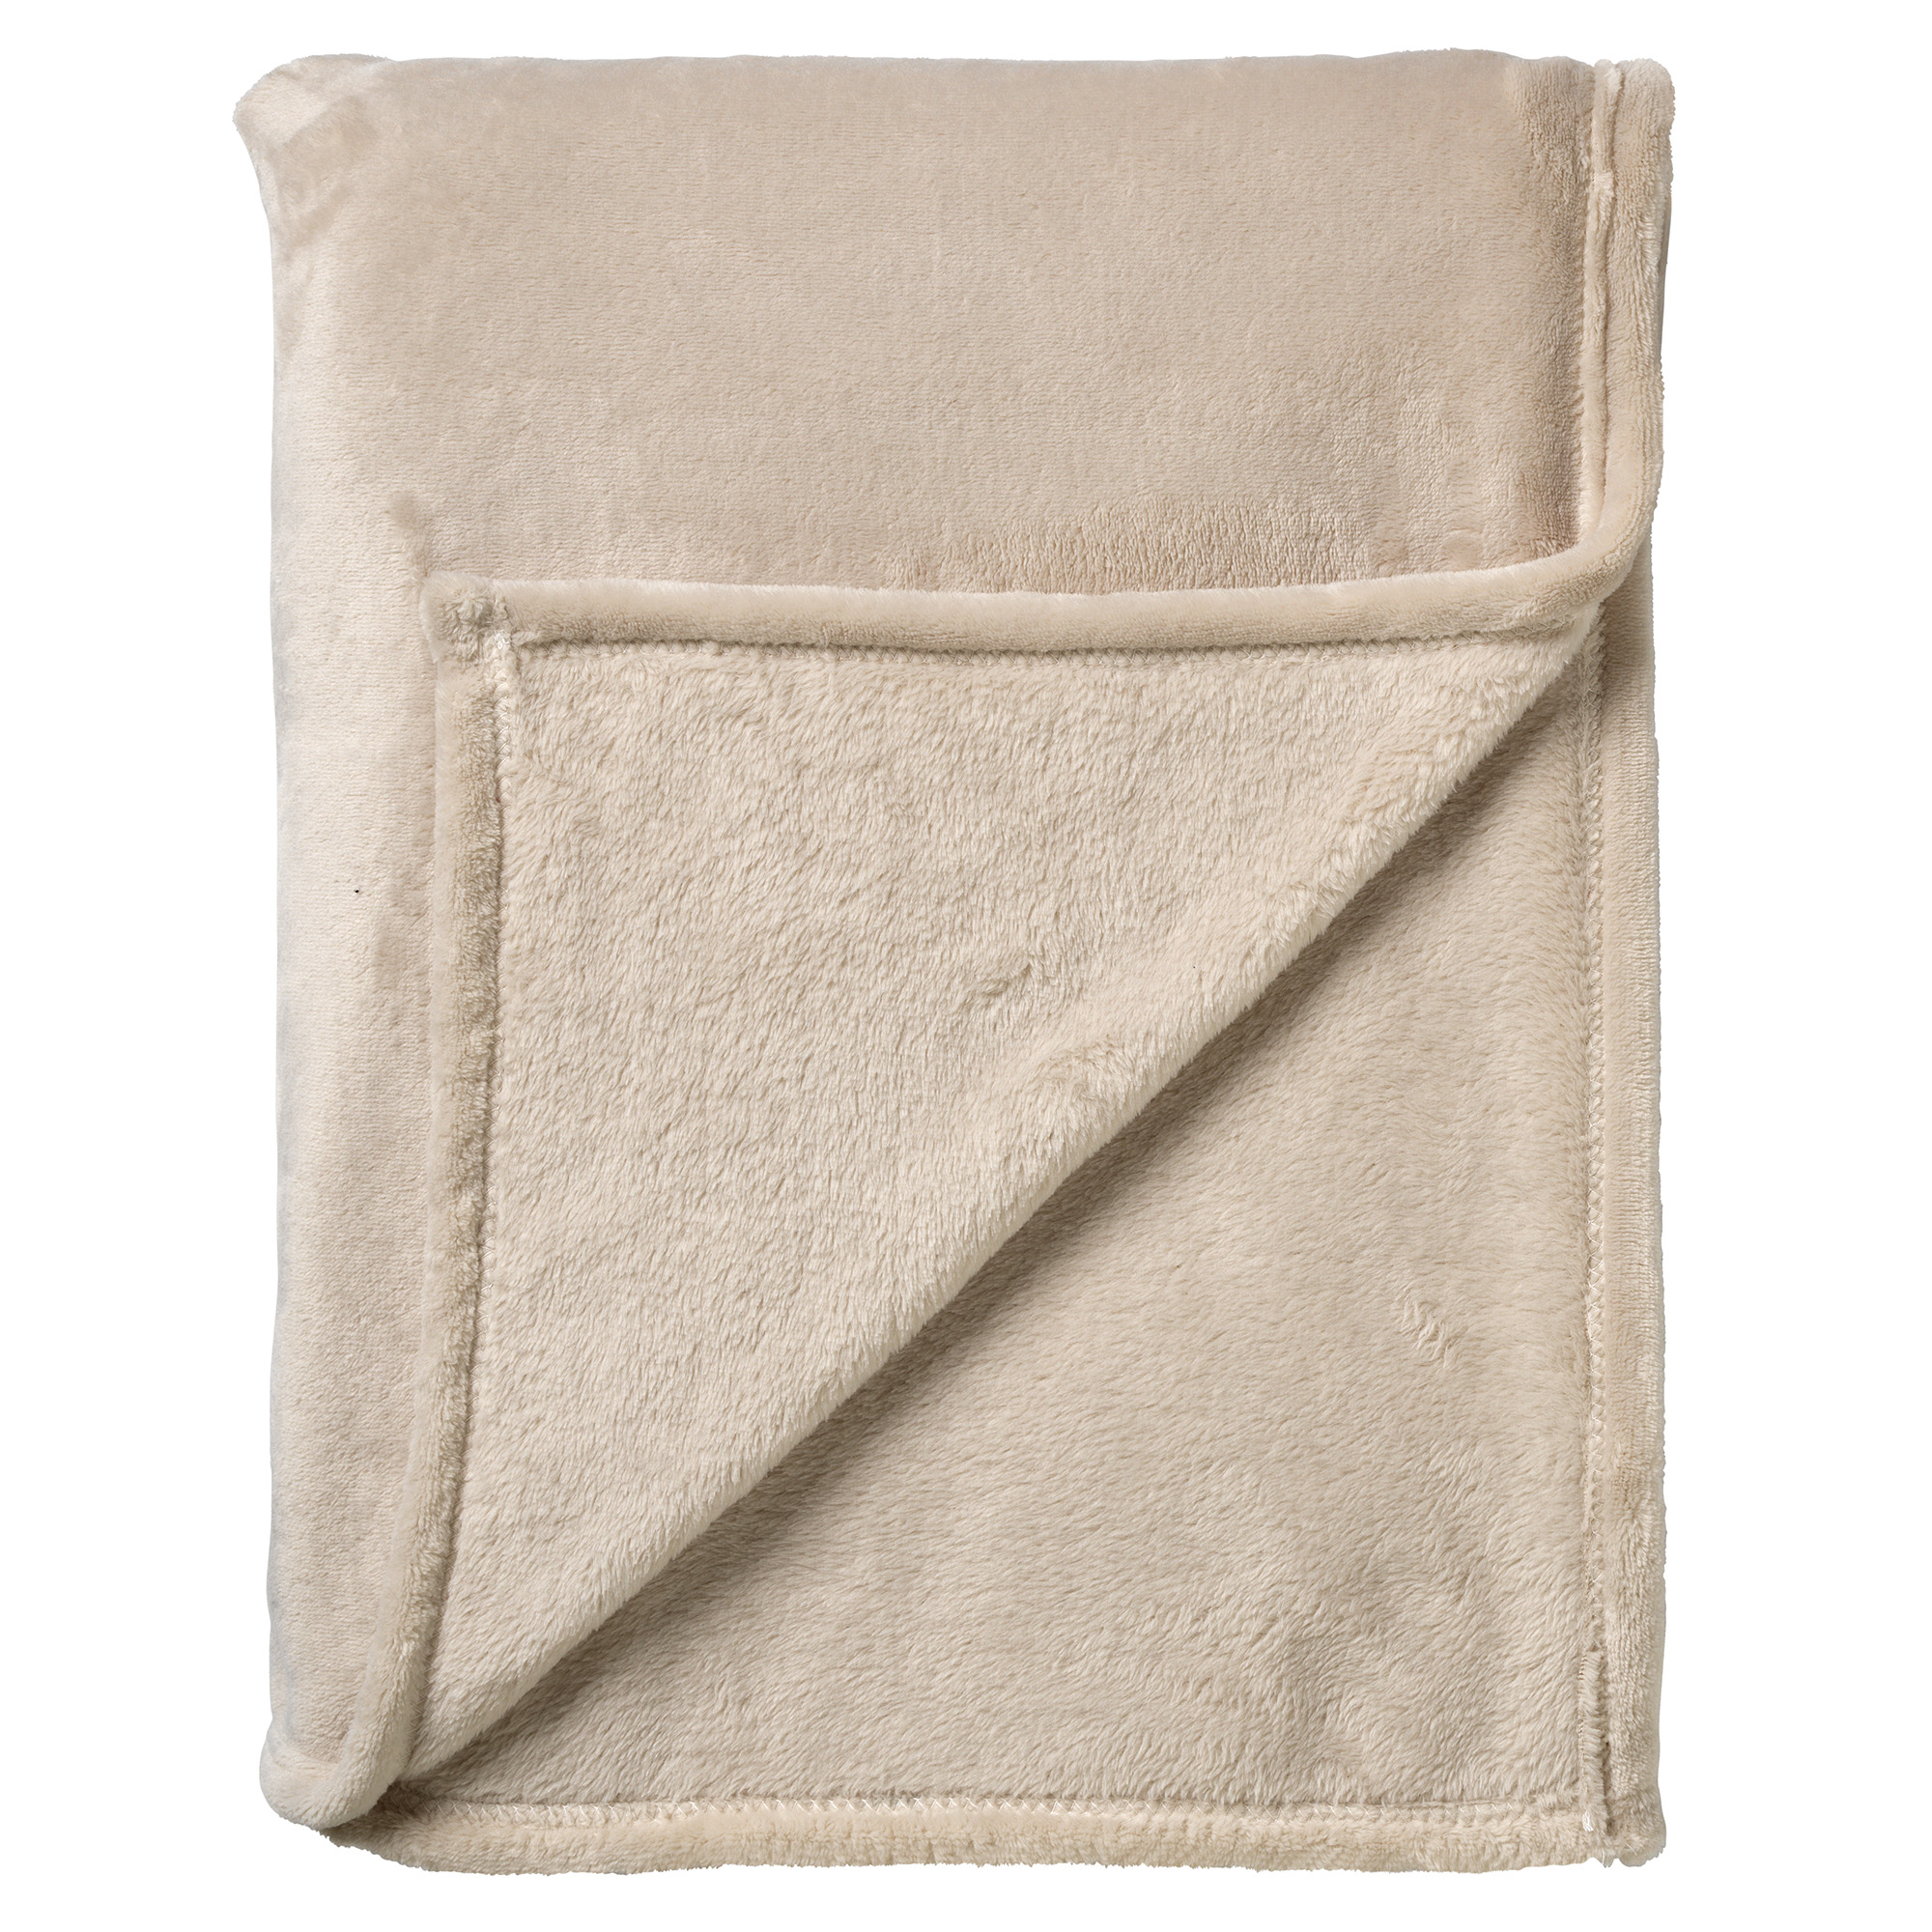 MARLEY - Plaid 150x200 cm - zachte fleece deken - extra dik - Pumice Stone - beige